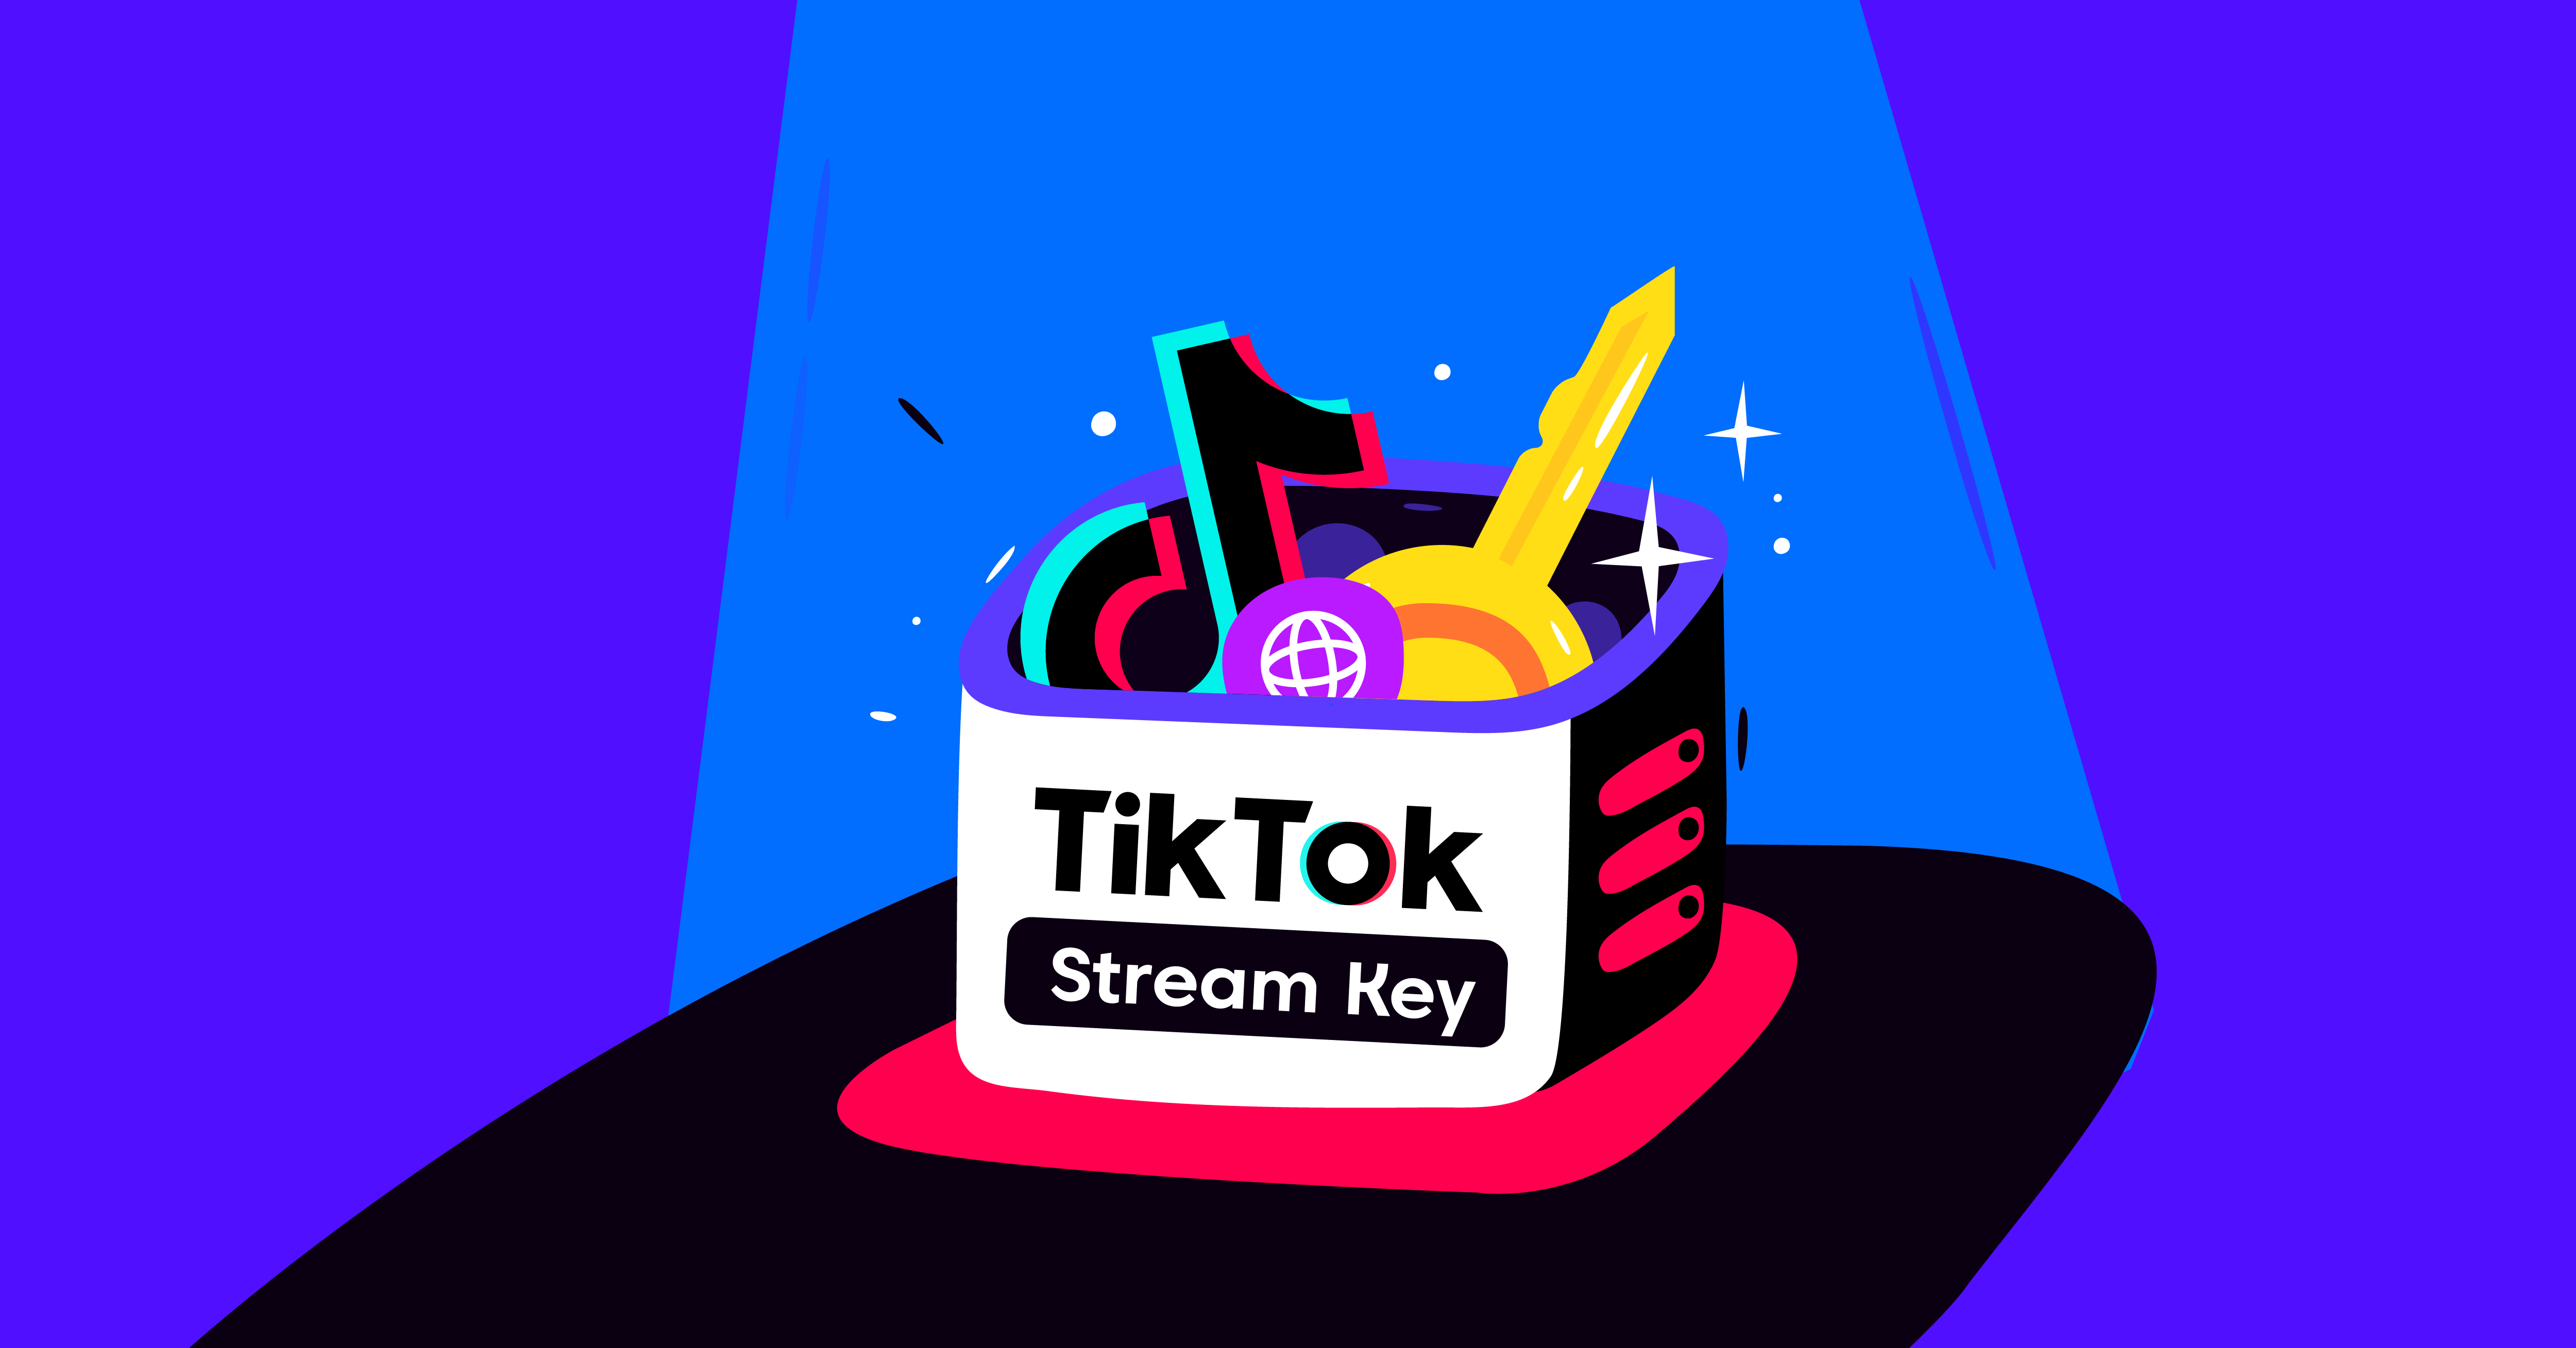 TikTok Stream key